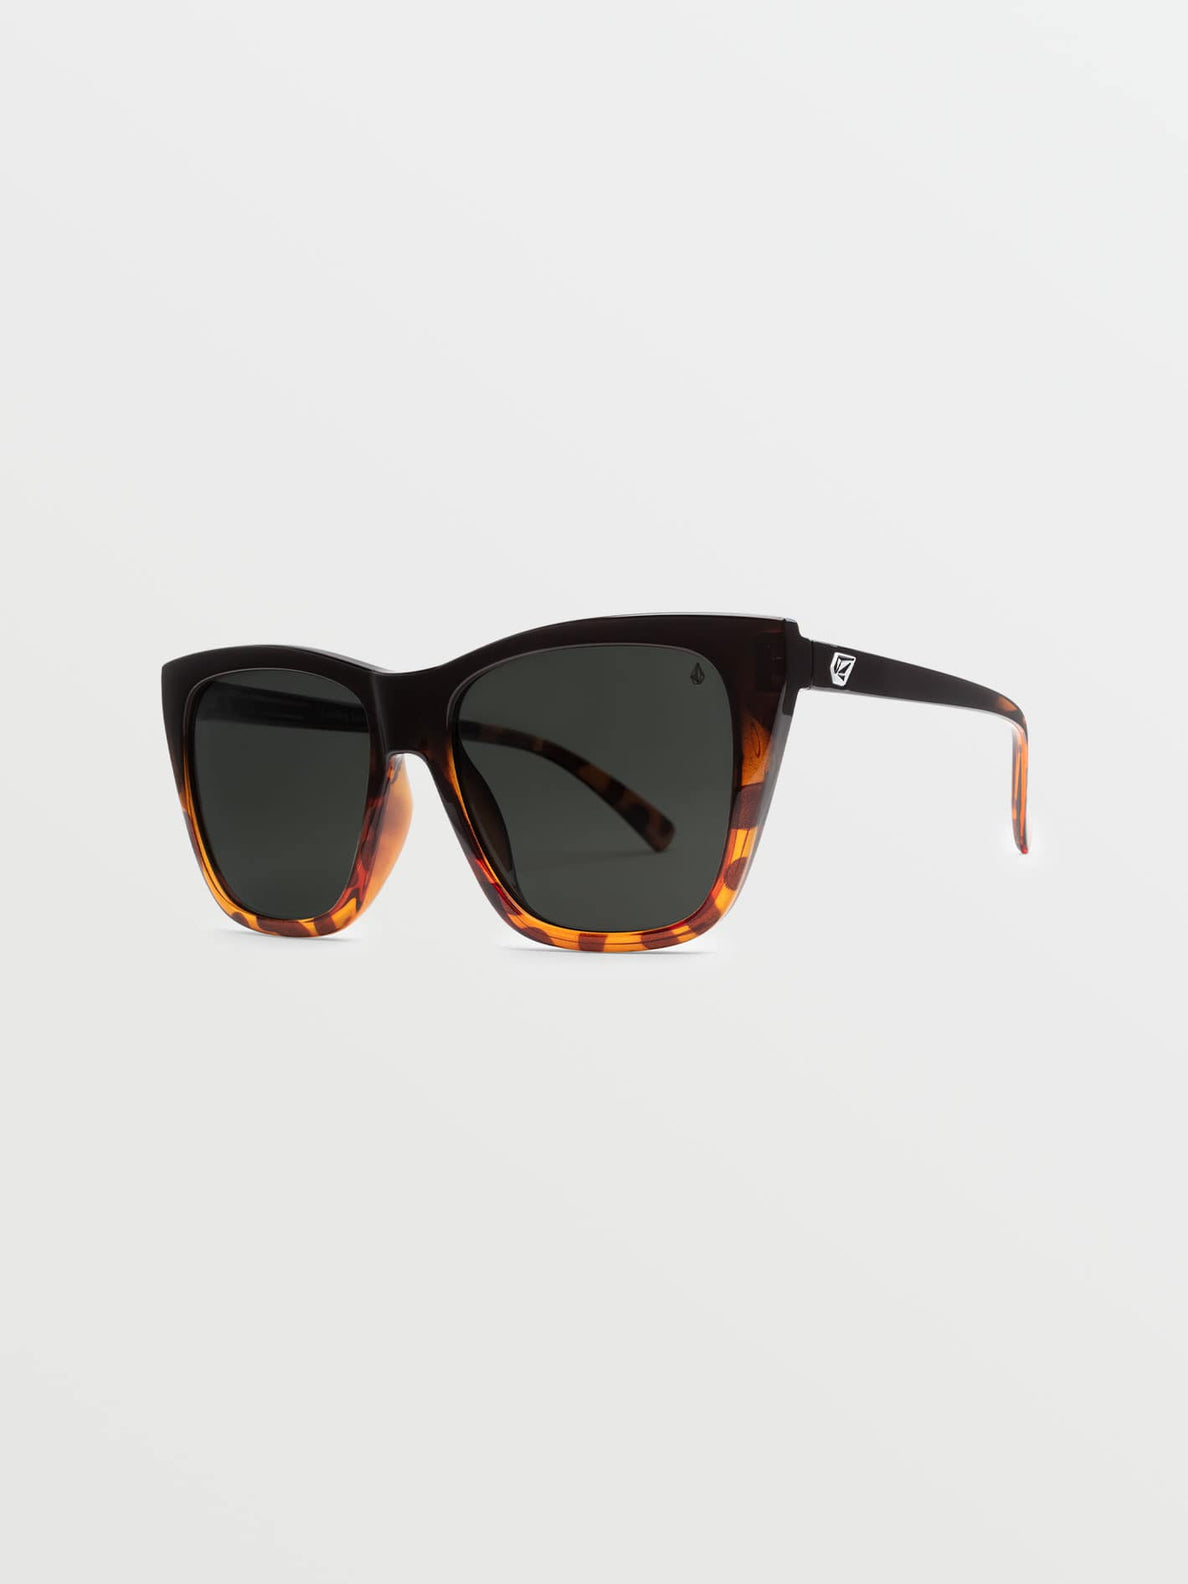 Volcom LookyLou Polarized Sunglasses.